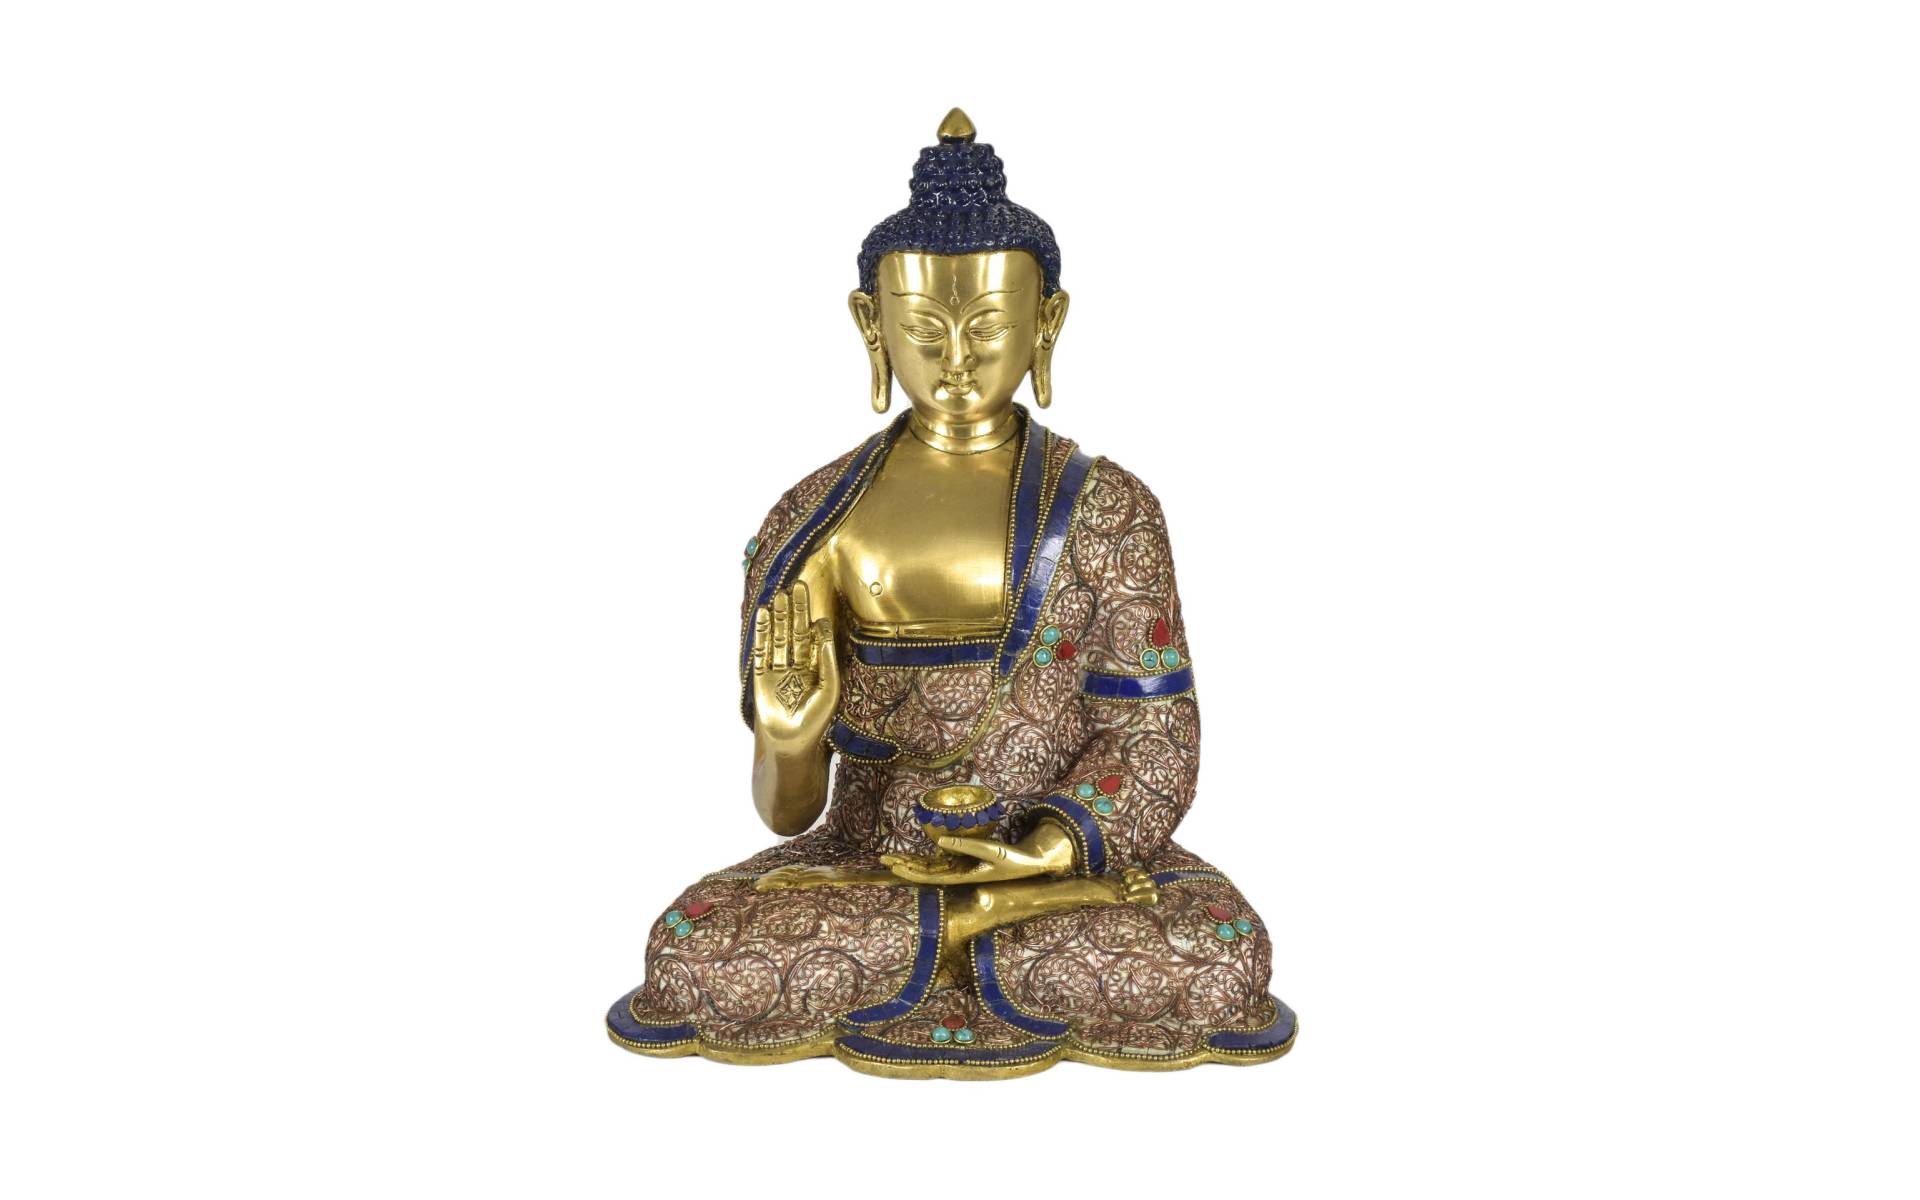 Budha s gestom učenia, mosadzná socha zdobená polodrahokamami, 26x16x33cm